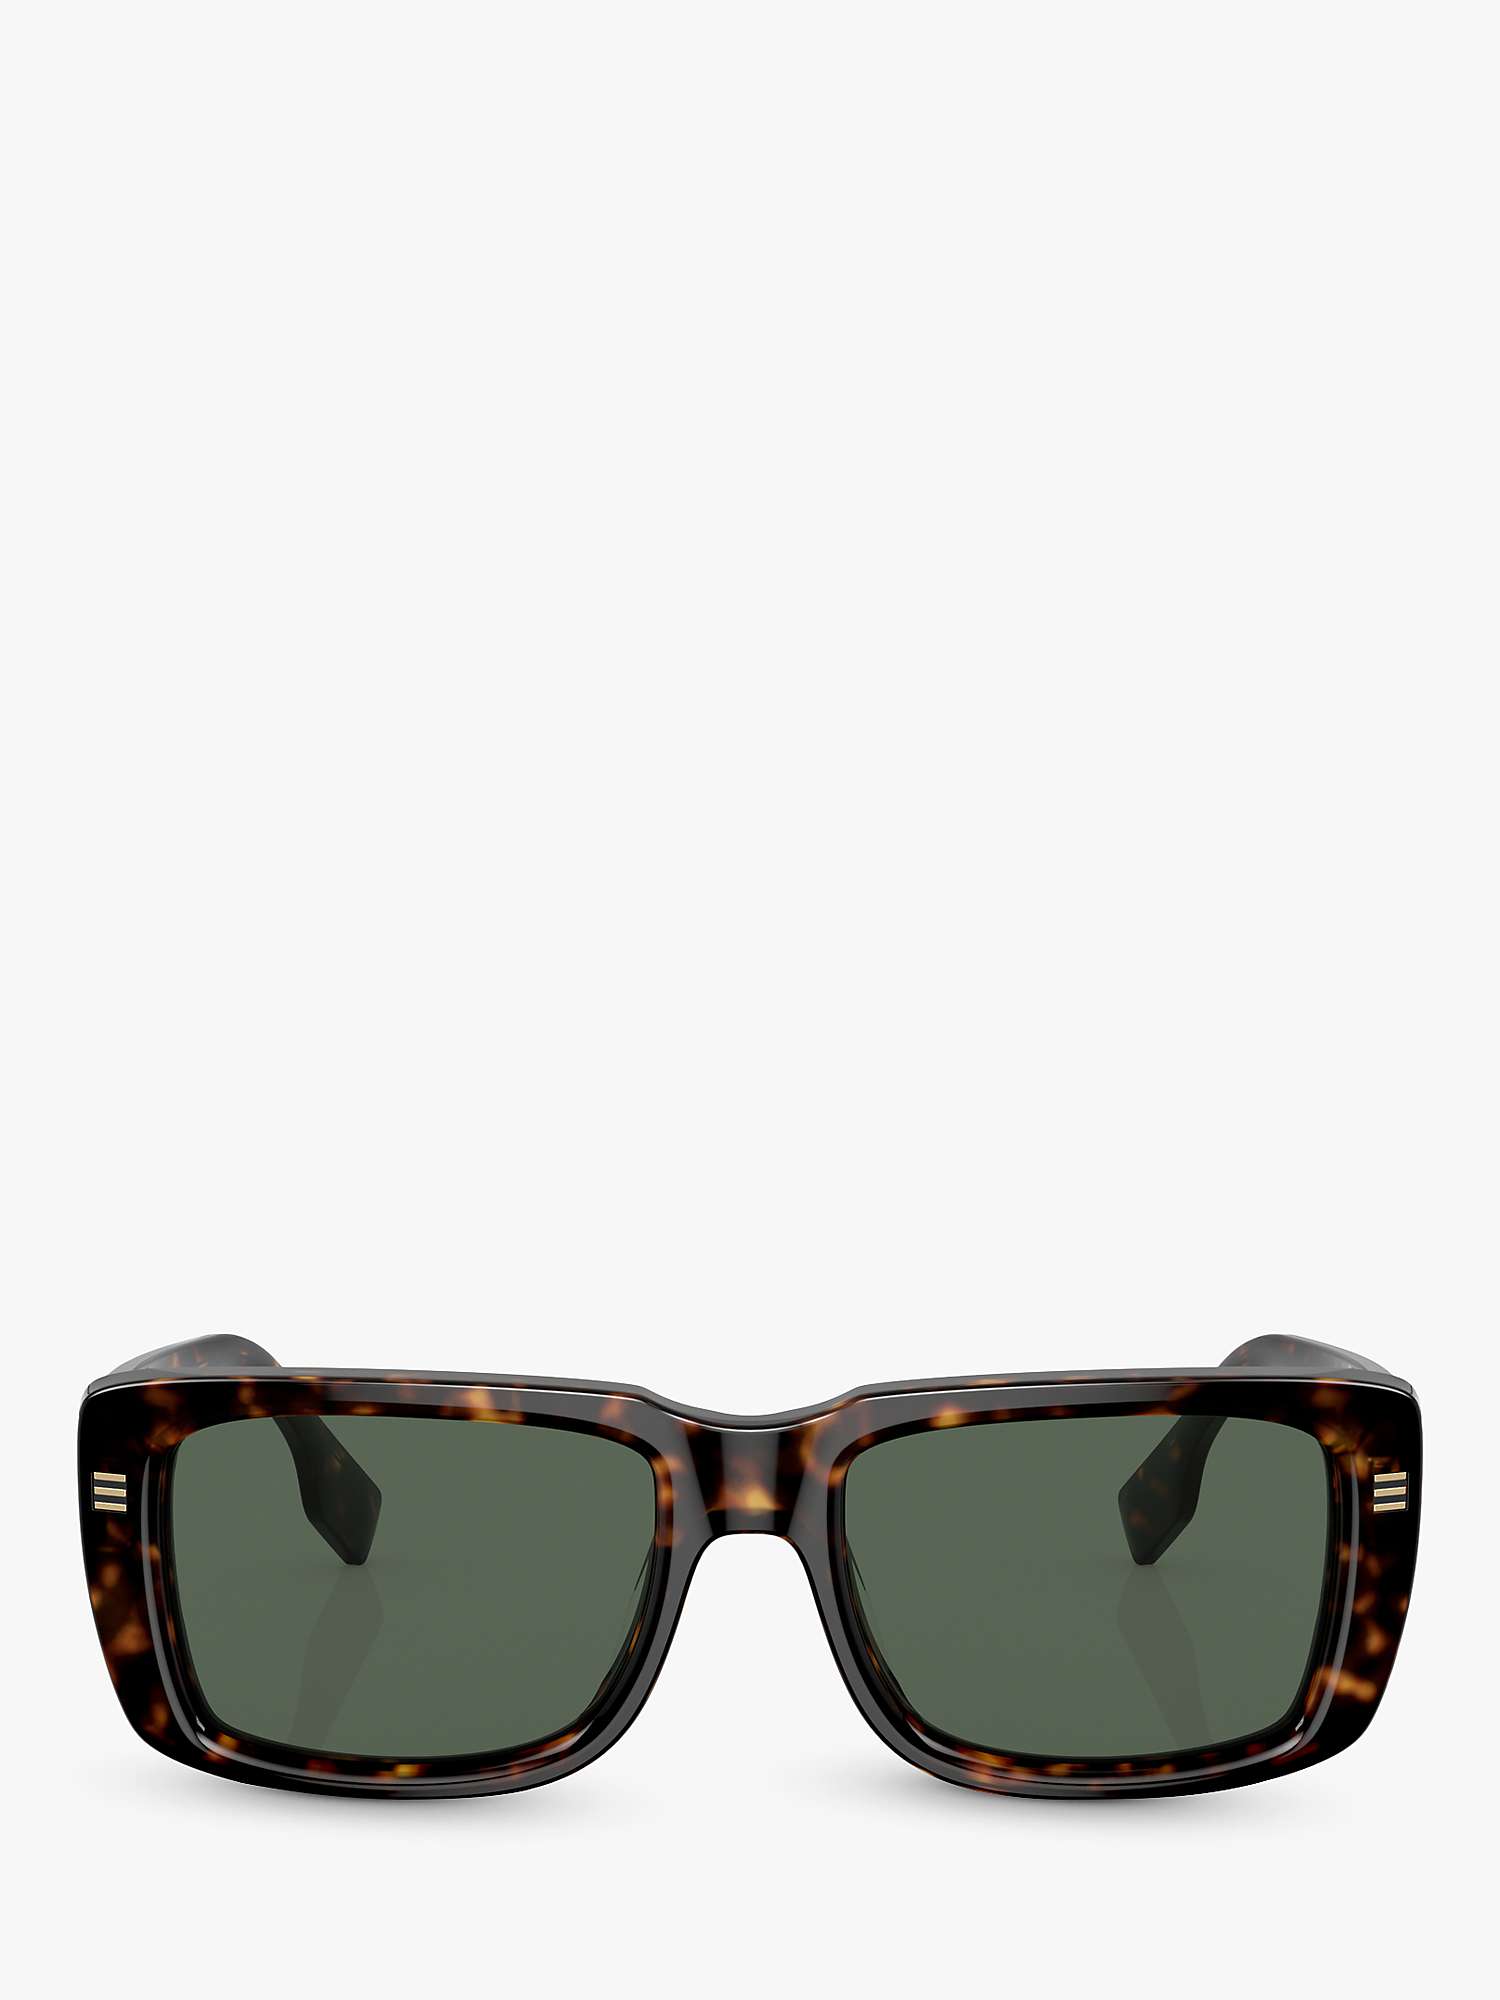 Buy Burberry BE4376U Men's Jarvis Rectangular Sunglasses, Avana Scura Online at johnlewis.com